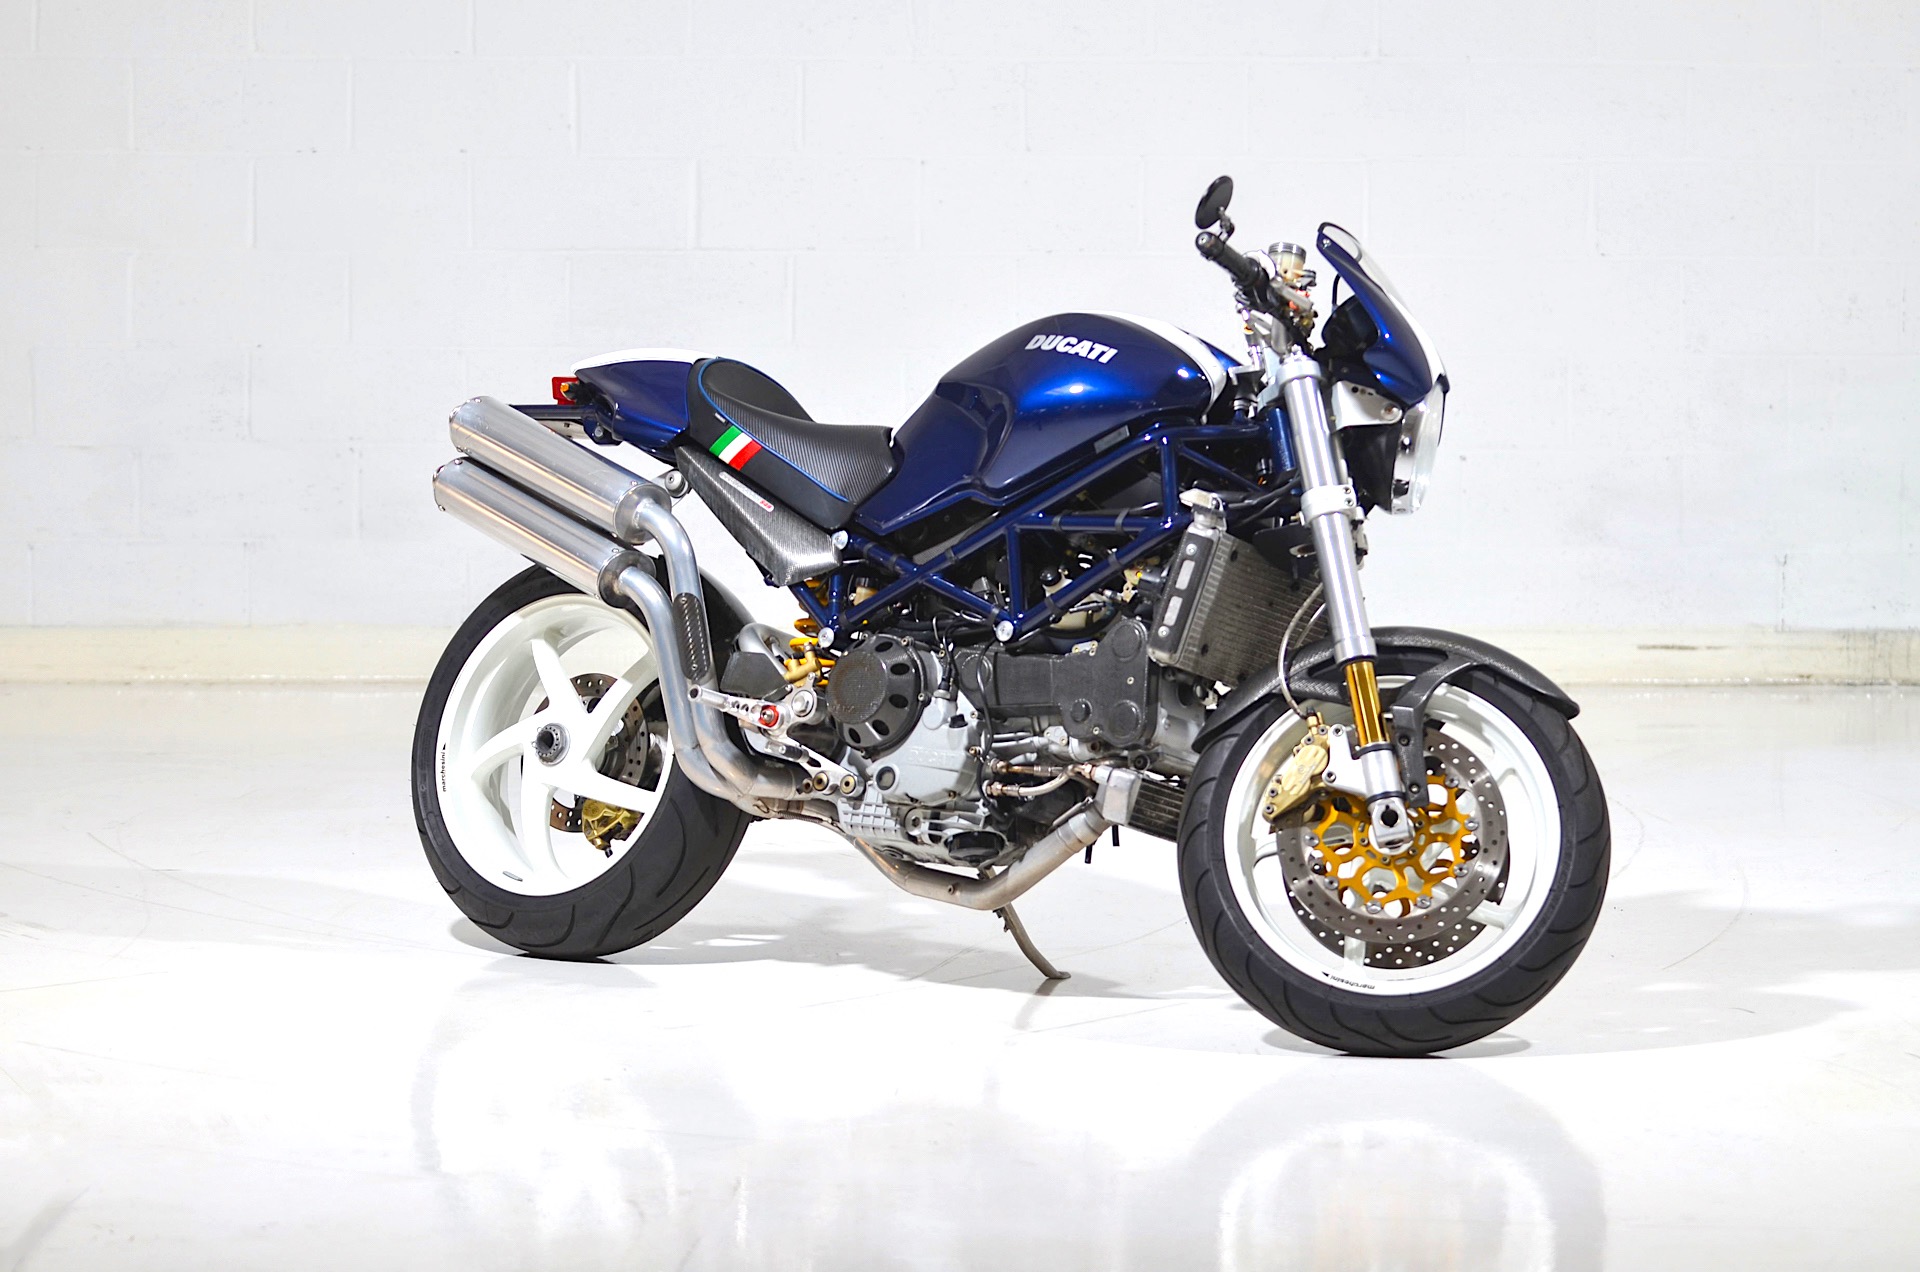 Used 2004 Ducati MONSTER S4R For Sale ($4,500) | Motorcar ...